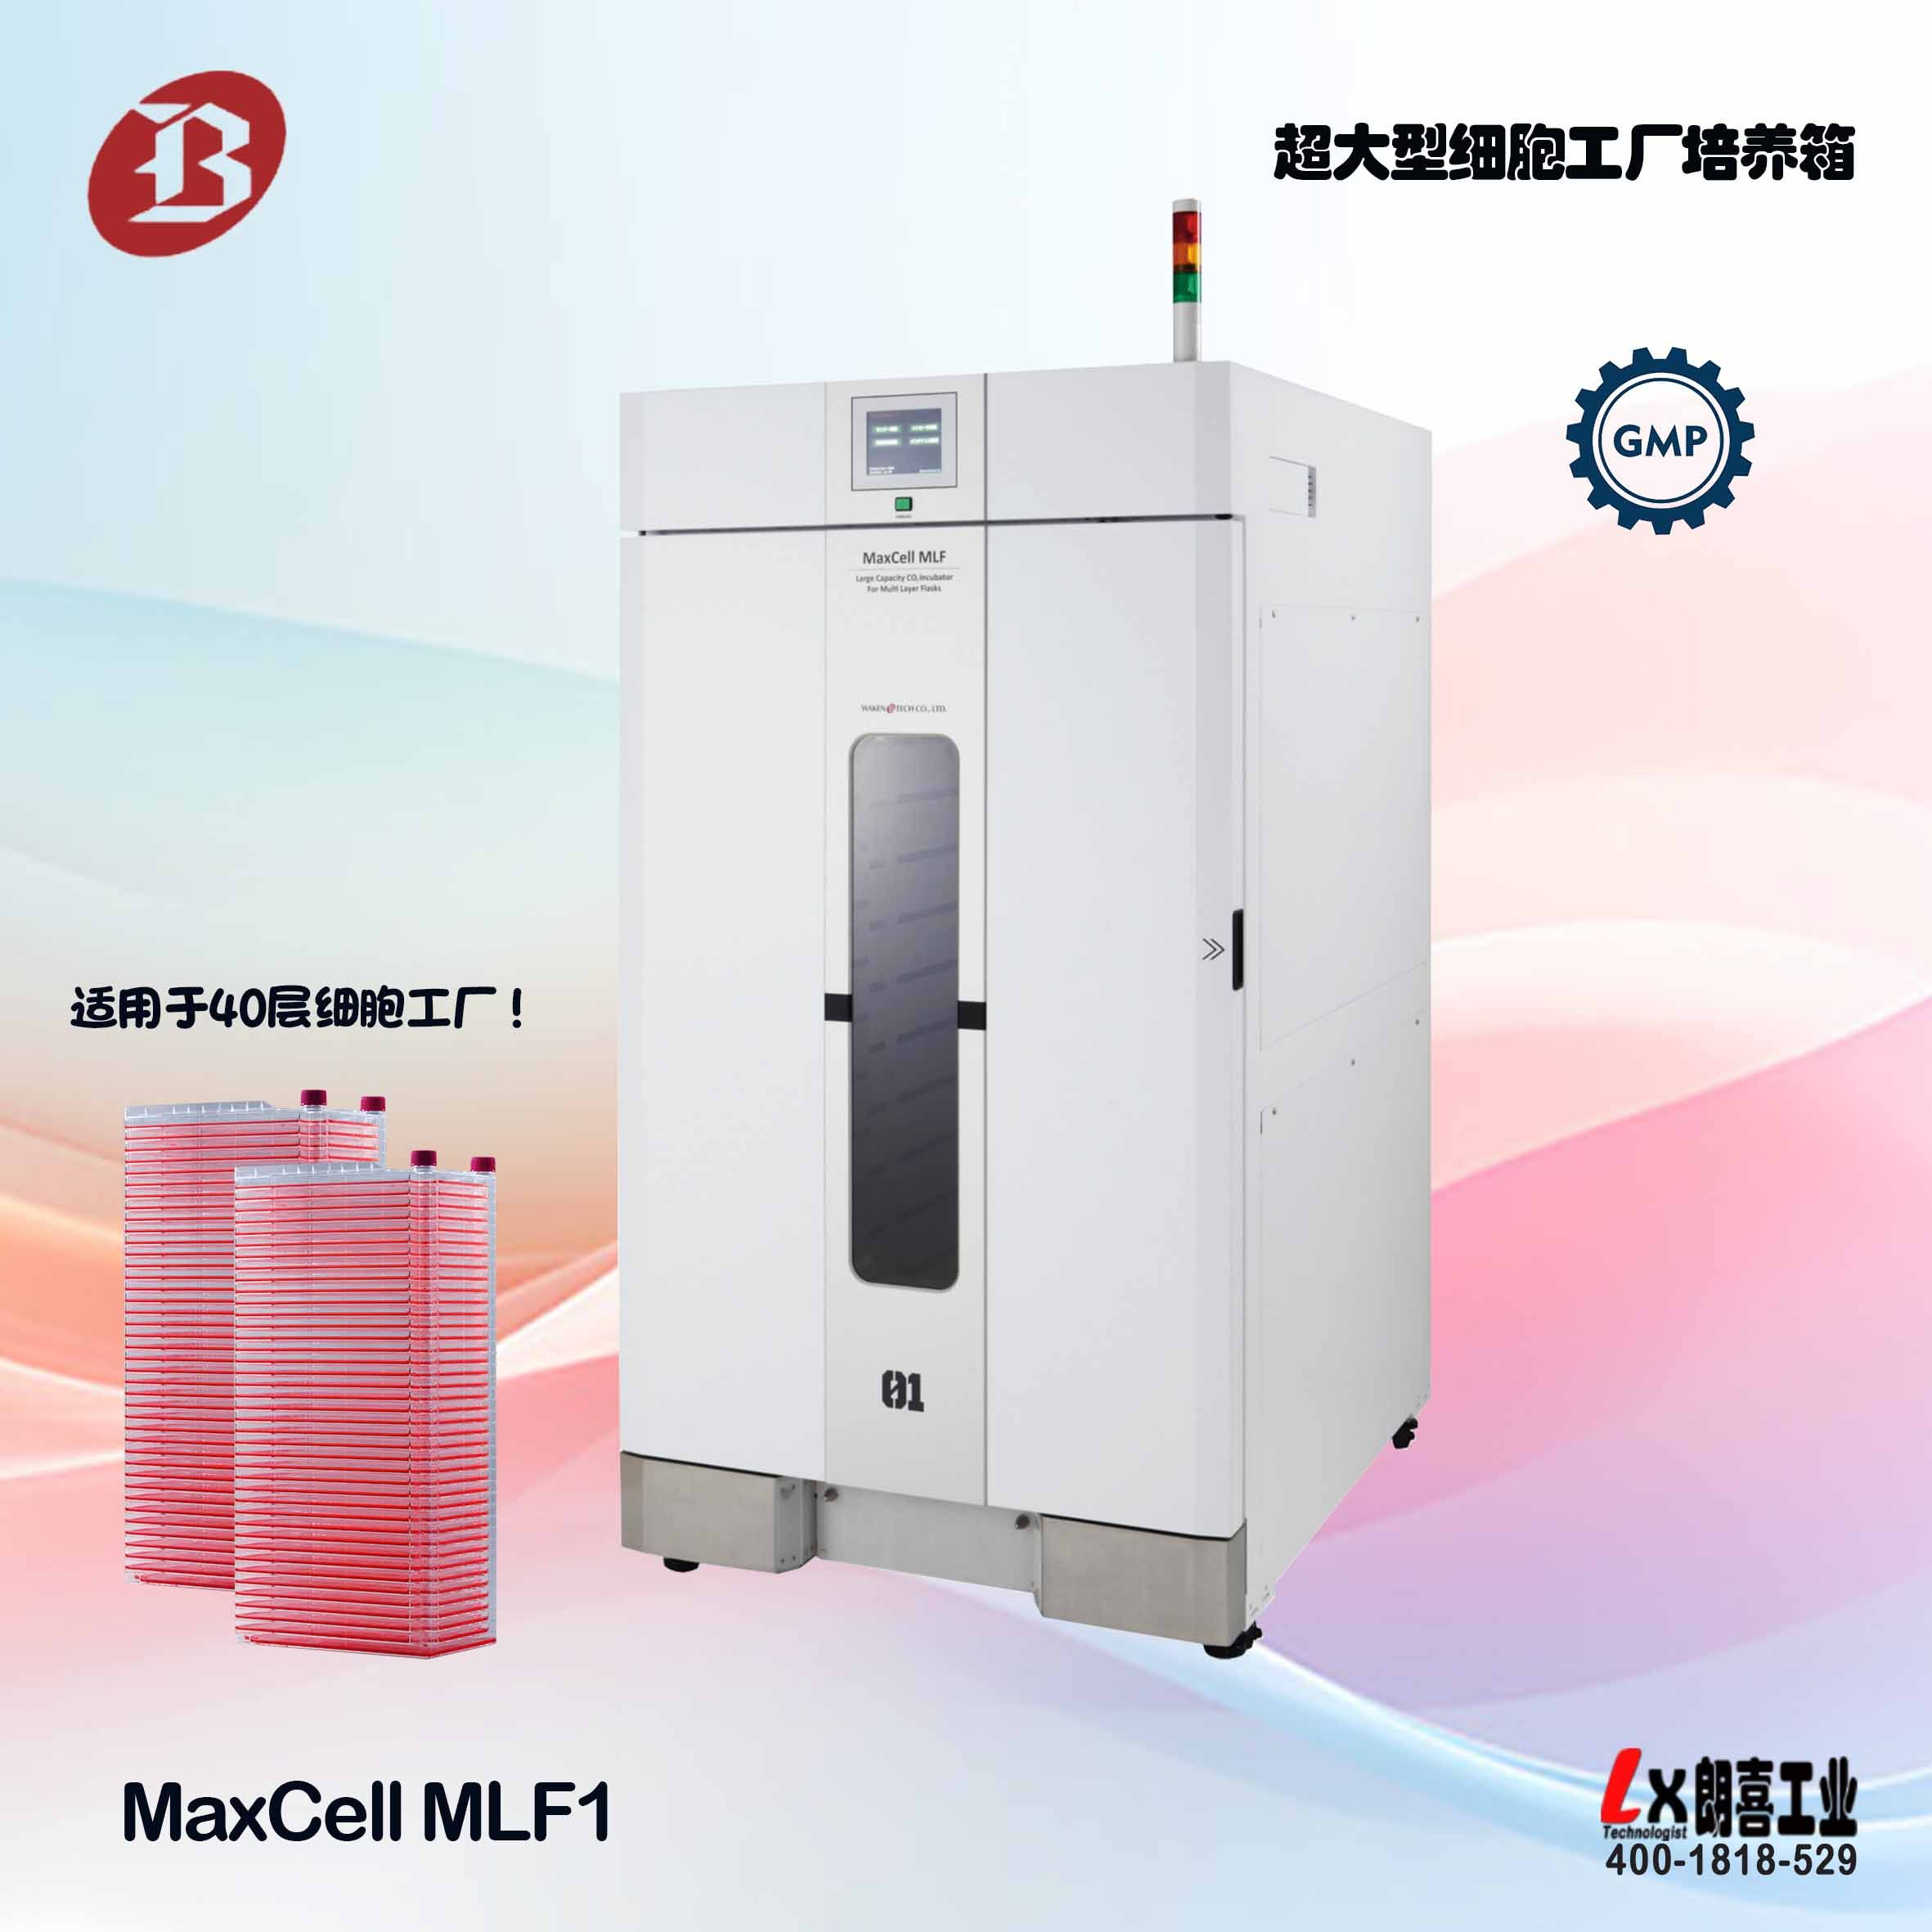 MaxCell MLF超大型二氧化碳培养箱（细胞工厂专用）